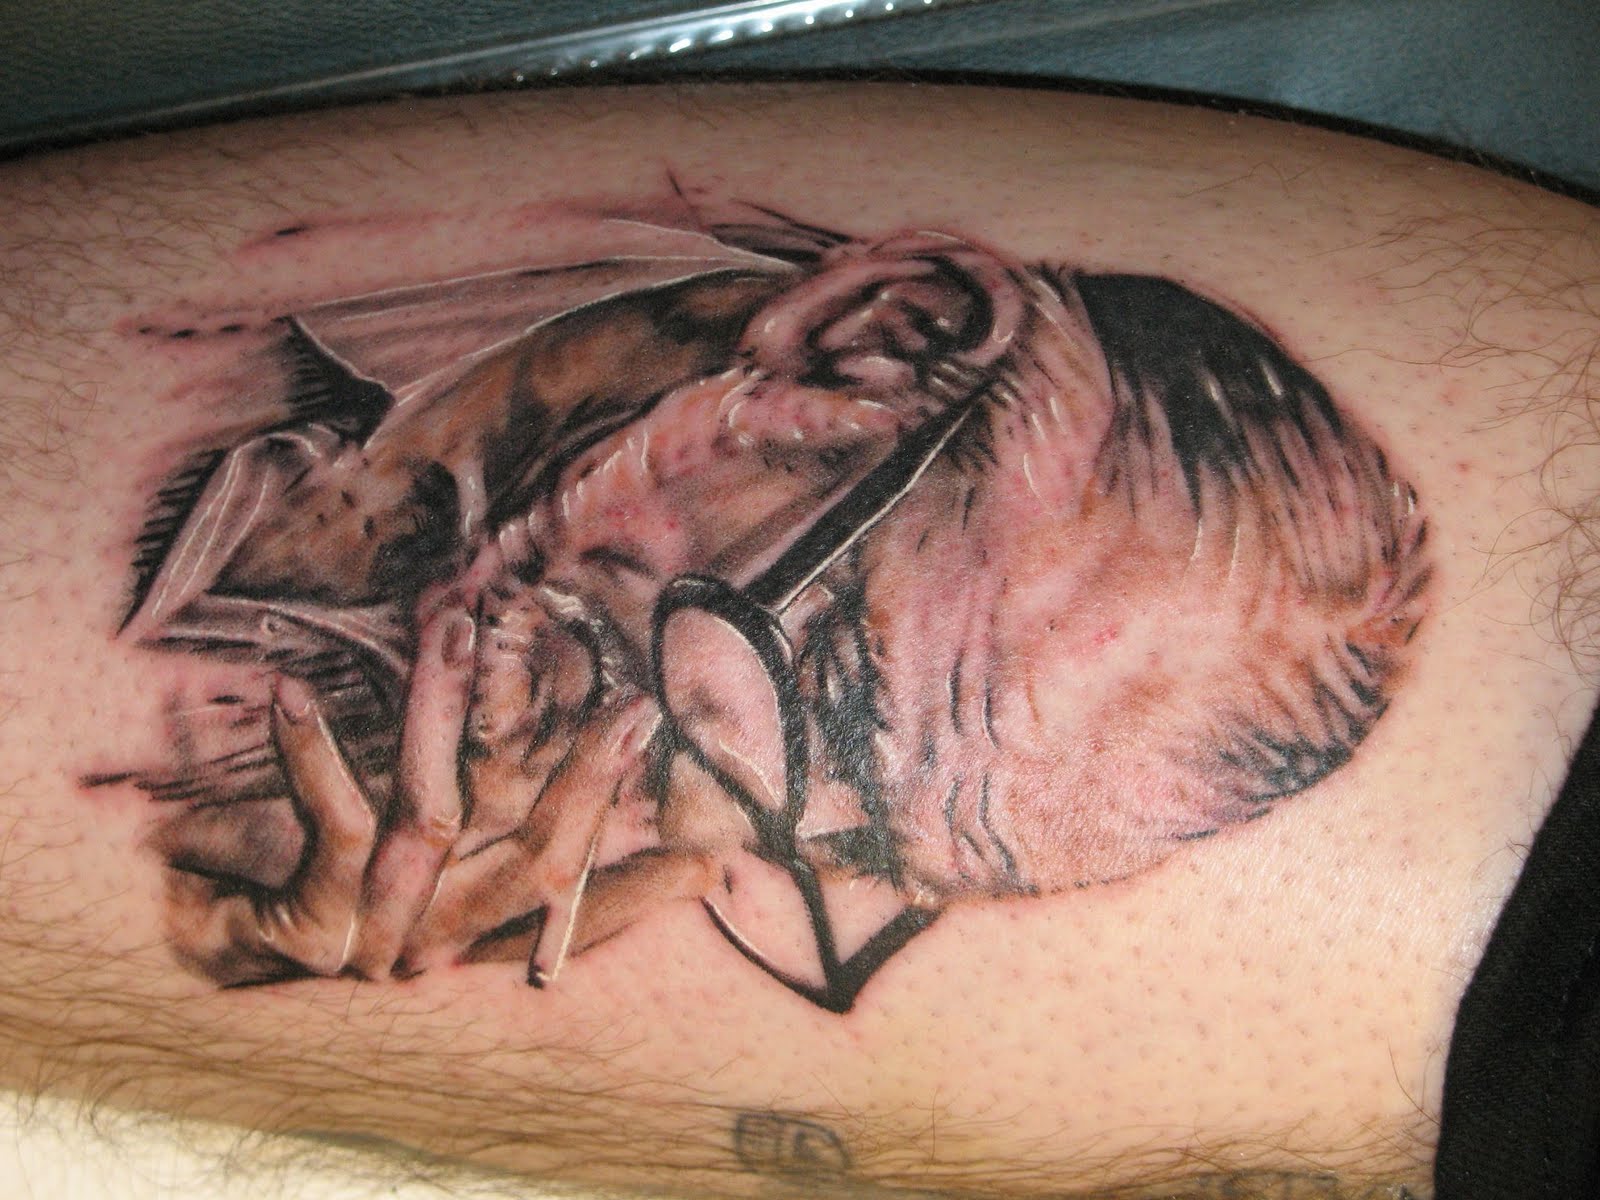 http://4.bp.blogspot.com/-TYkSxT2VZkk/TcRVhvB6bLI/AAAAAAAAAX0/PajNHb8kWfY/s1600/Awesome-Zombie-Tattoo-Design-for-Men-2011.jpg